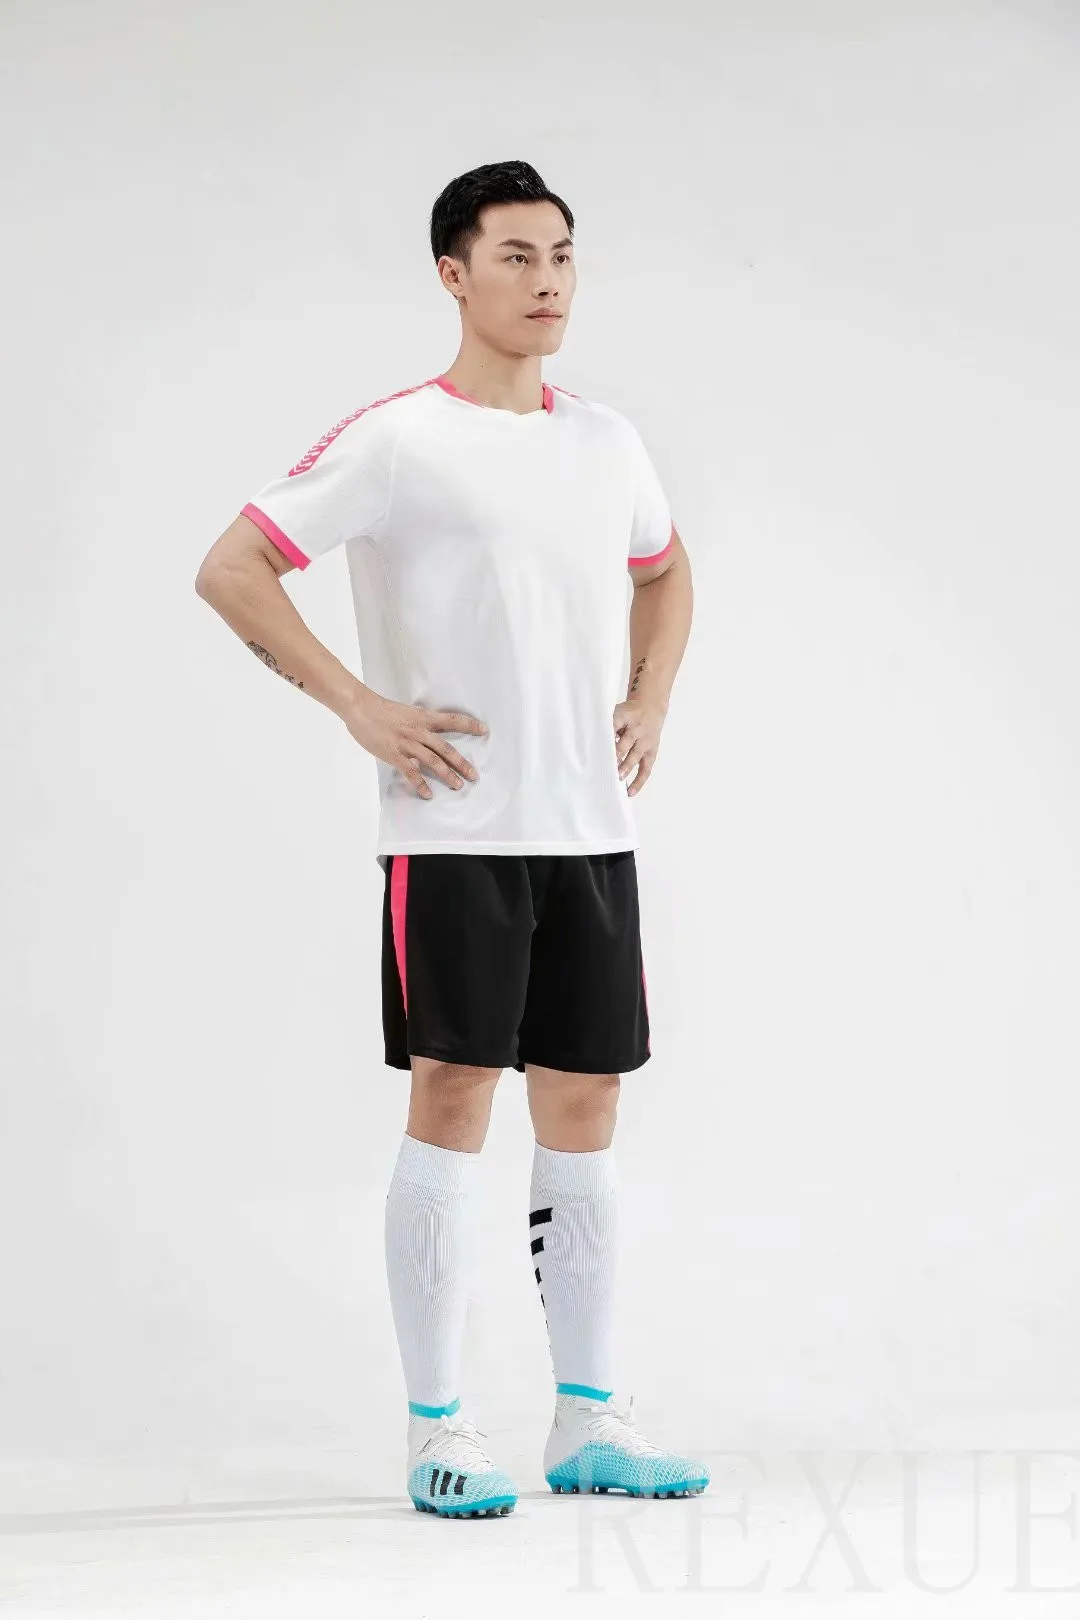 A&H Fashion Kids Boys Soccer Football Short Sleeve T-Shirt Short Set Kit Jersey New UK 